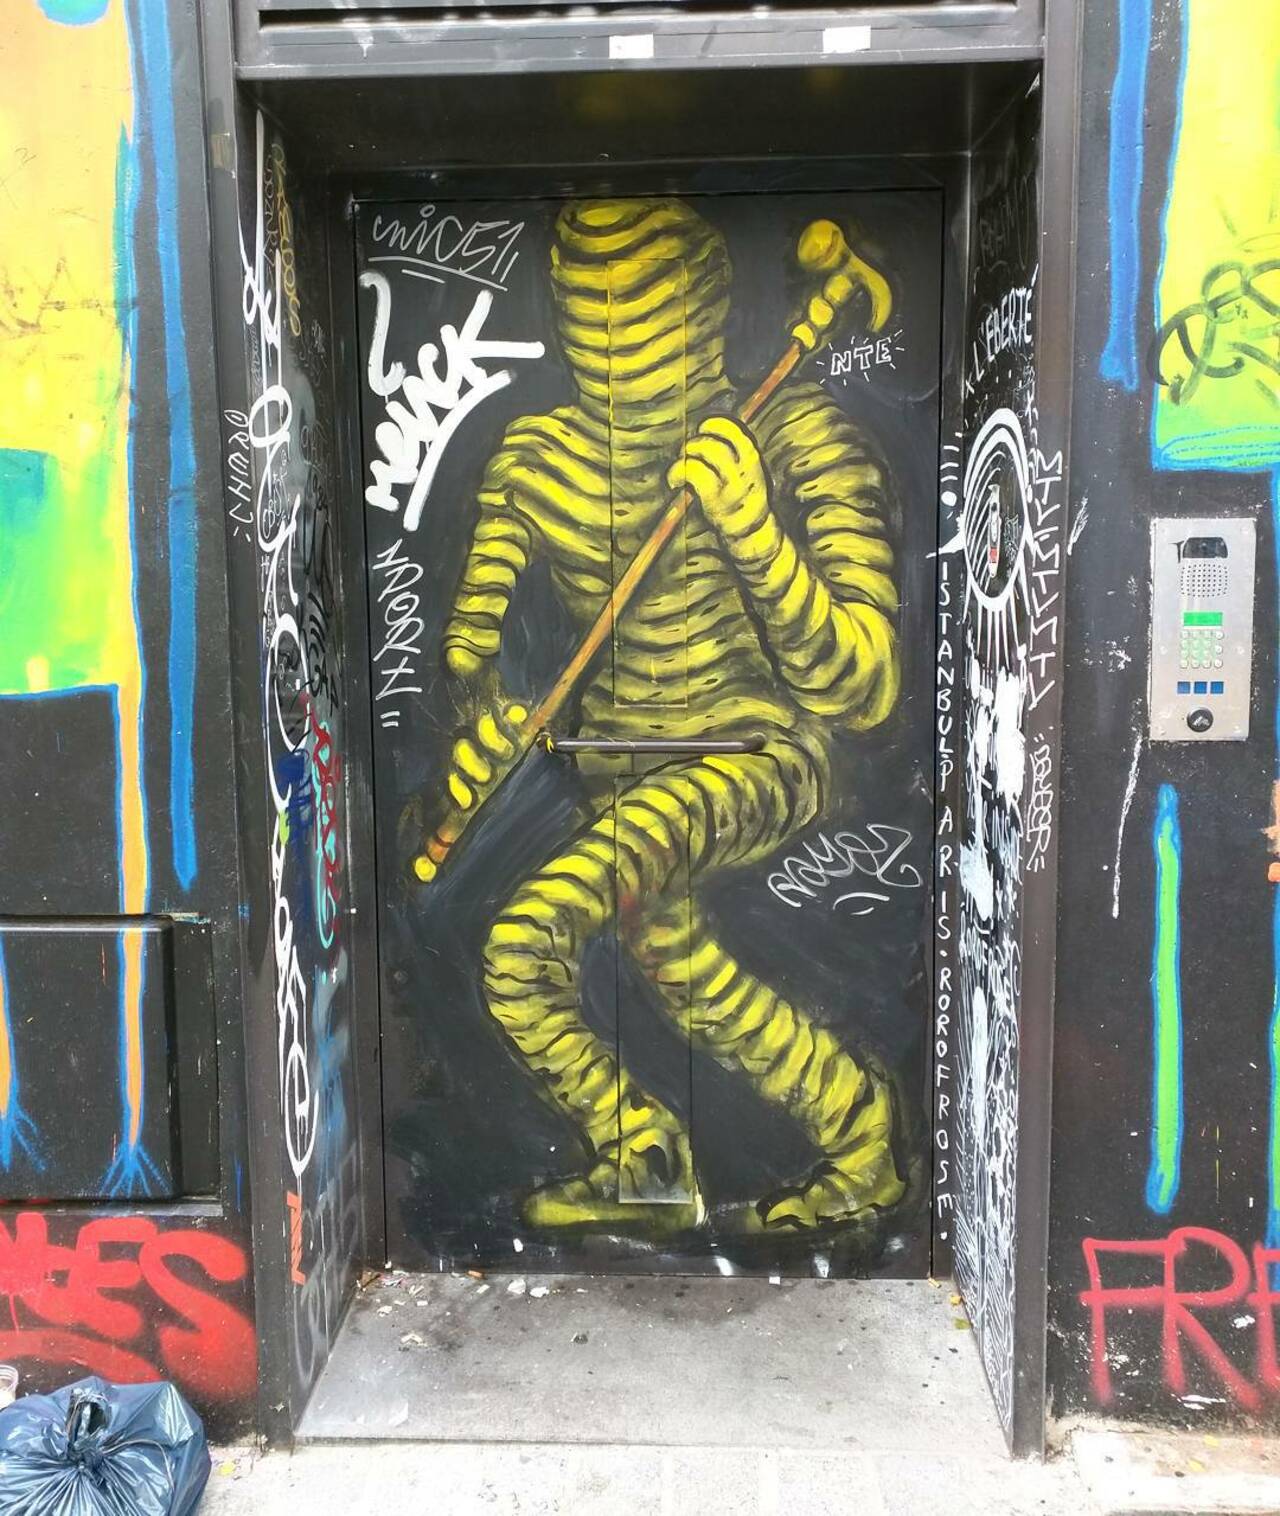 #Paris #graffiti photo by @alphaquadra http://ift.tt/1KOsgdQ #StreetArt http://t.co/zCupyH0bPd